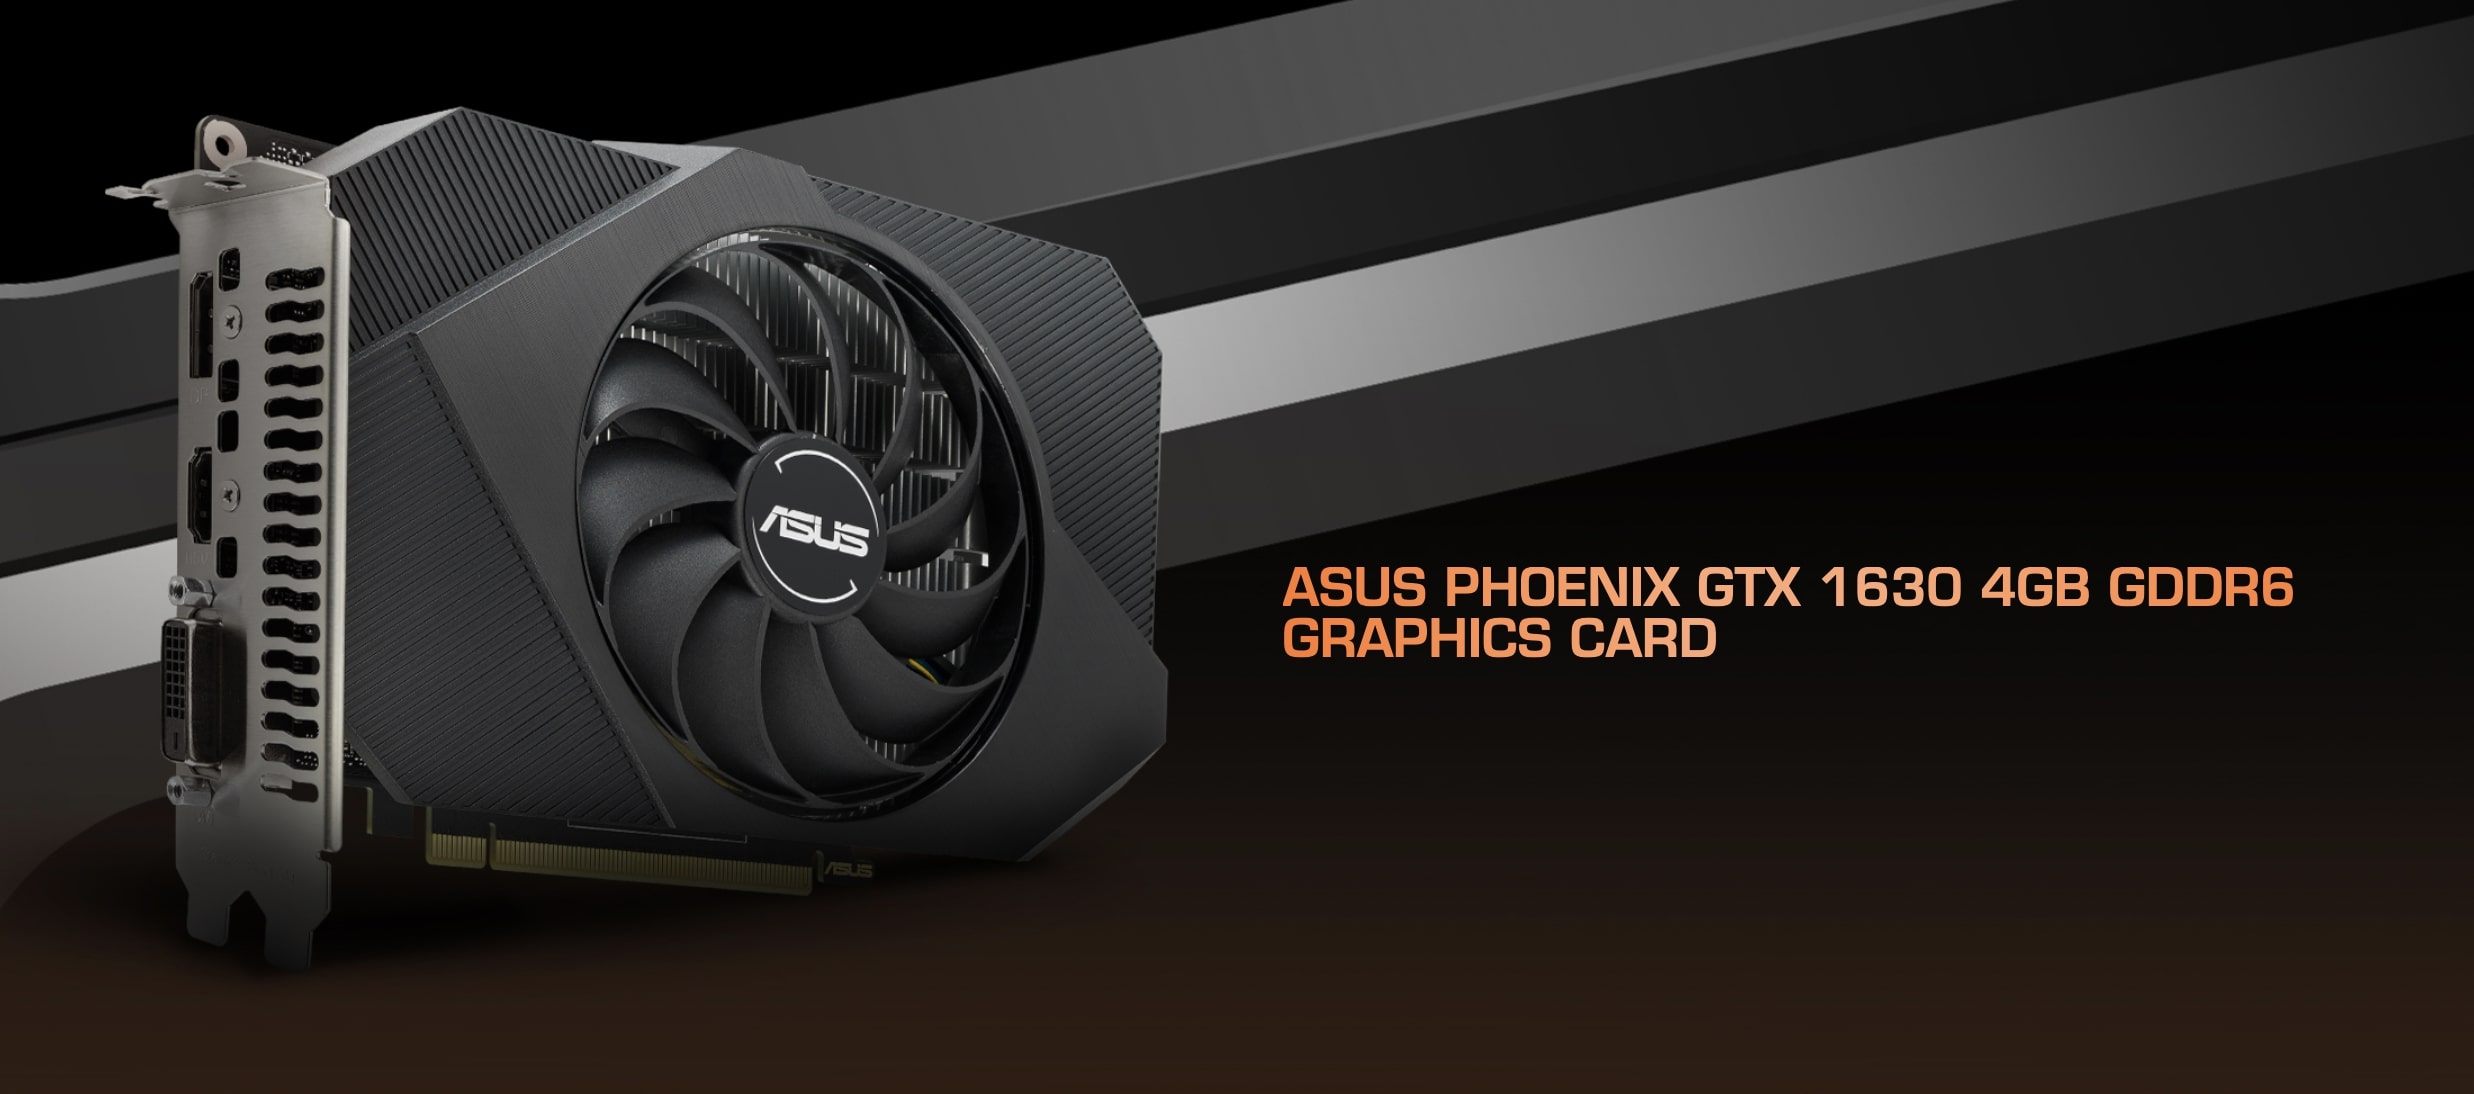 Asus Phoenix GTX 1630 4GB